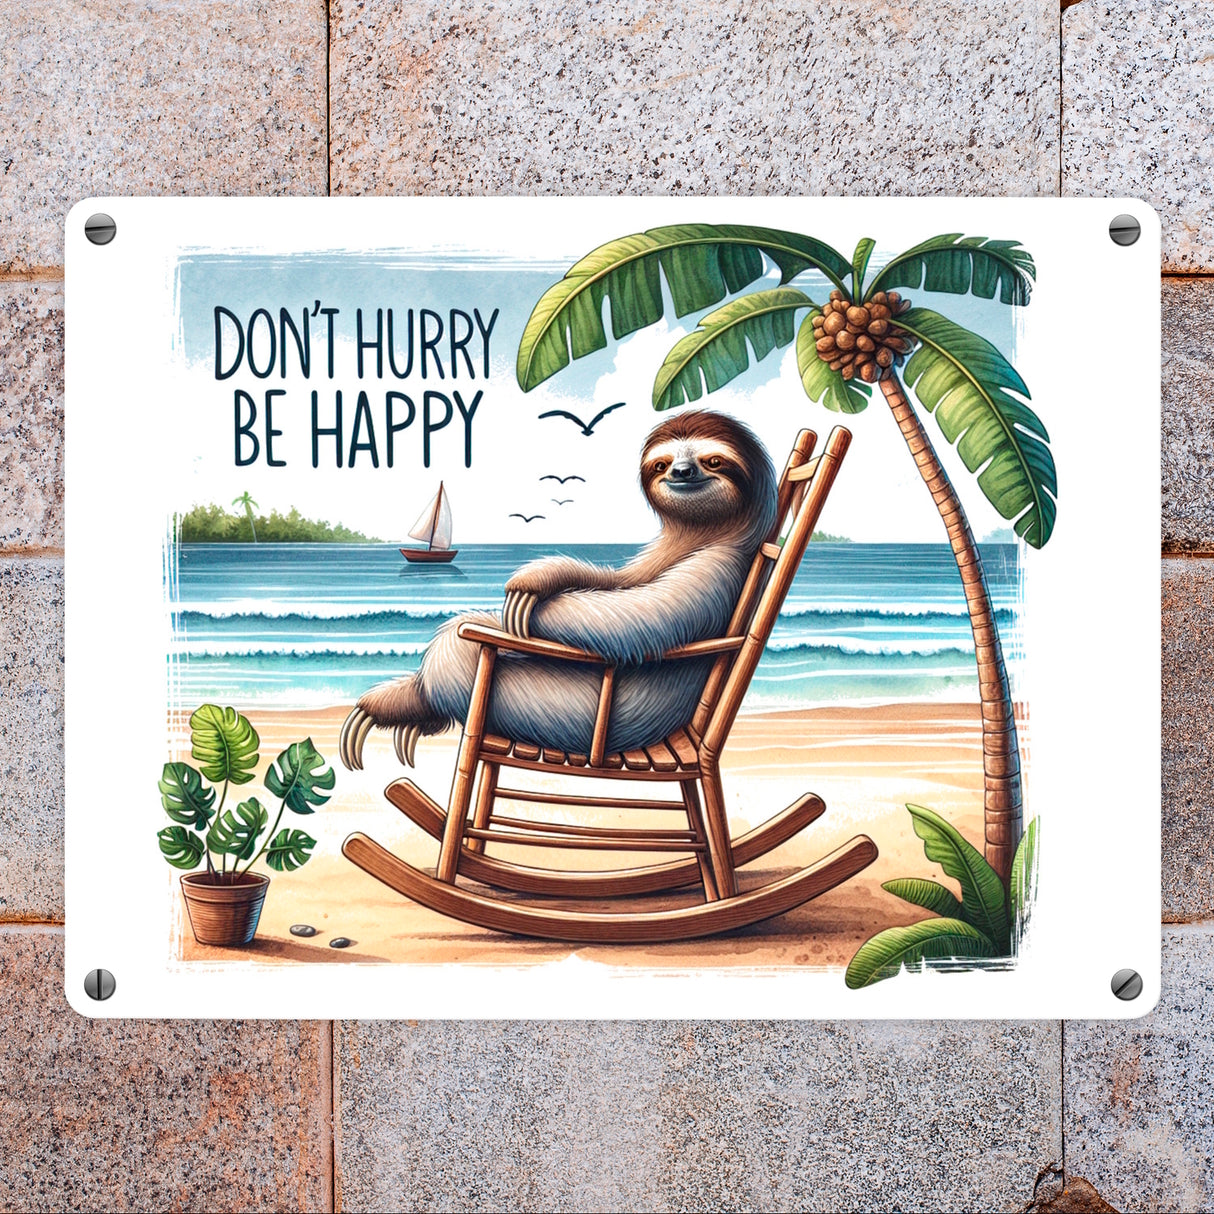 Faultier am Strand Metallschild in 15x20 cm mit Spruch Don't hurry - be happy